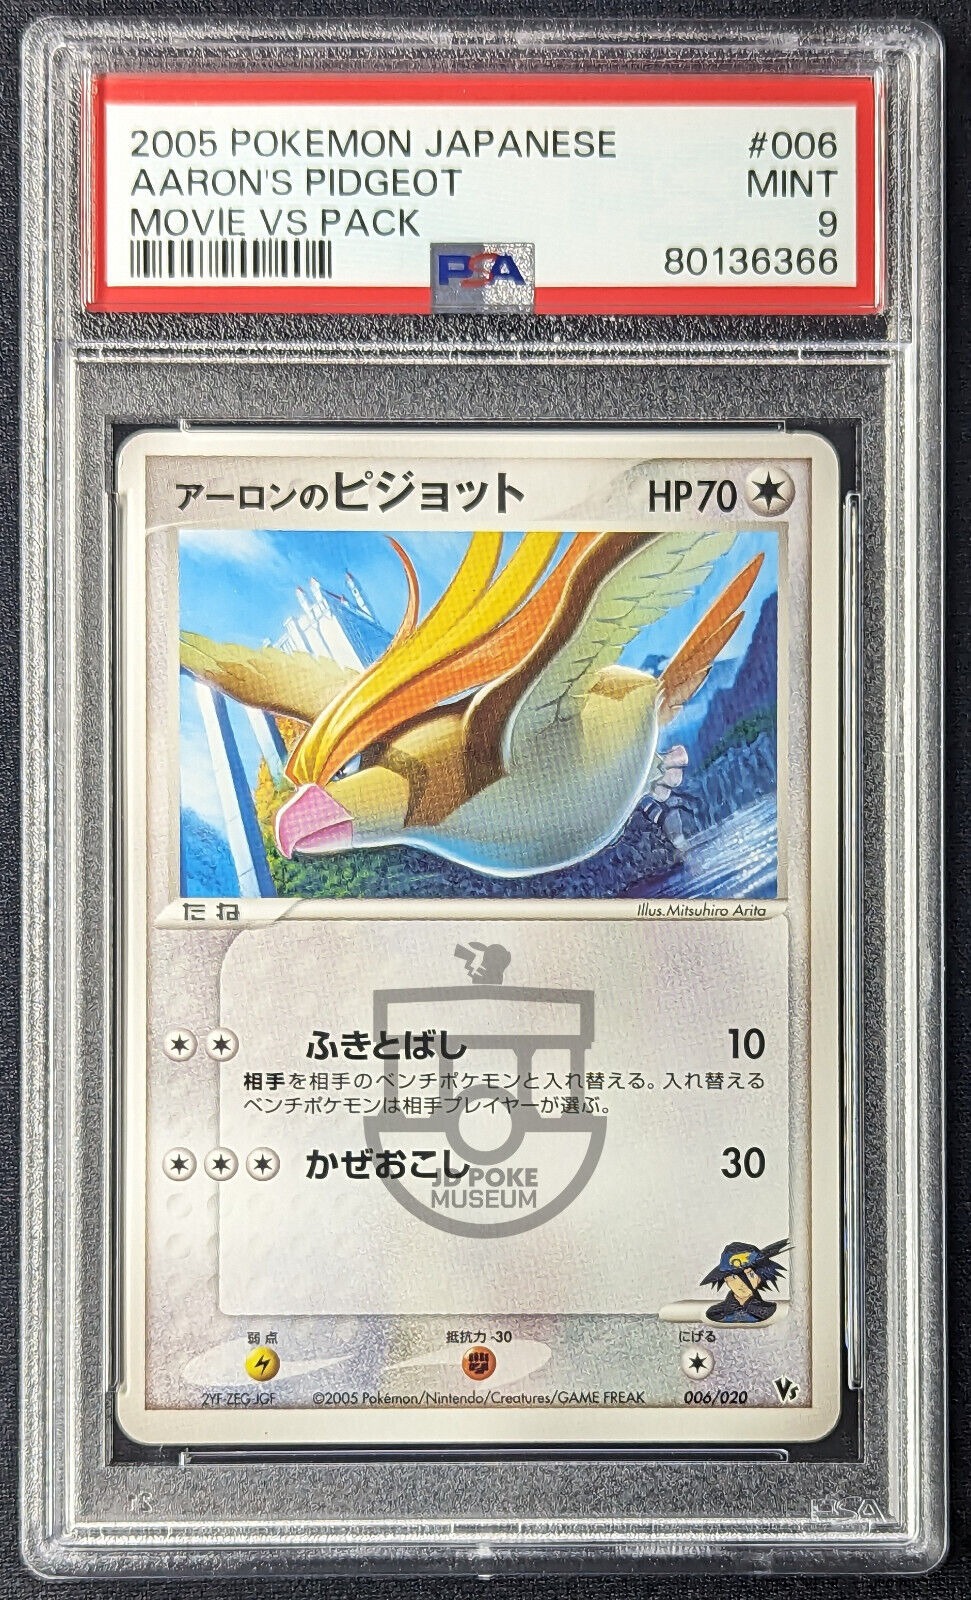 Pokemon 2005 Japanese Movie VS Pack - Aaron\'s Pidgeot 006/020 Card - Mint PSA 9